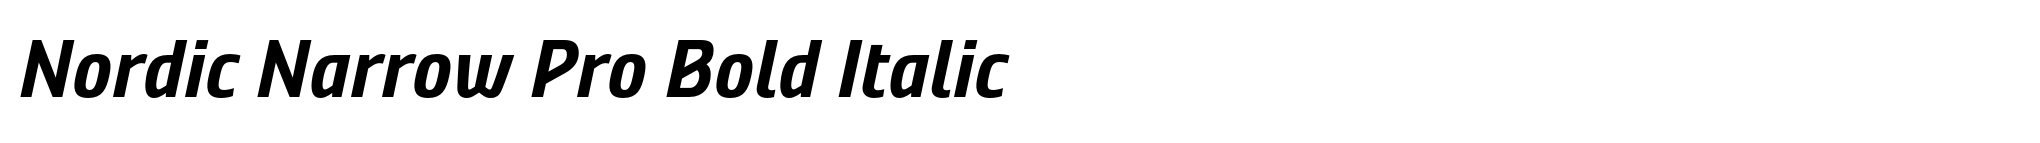 Nordic Narrow Pro Bold Italic image